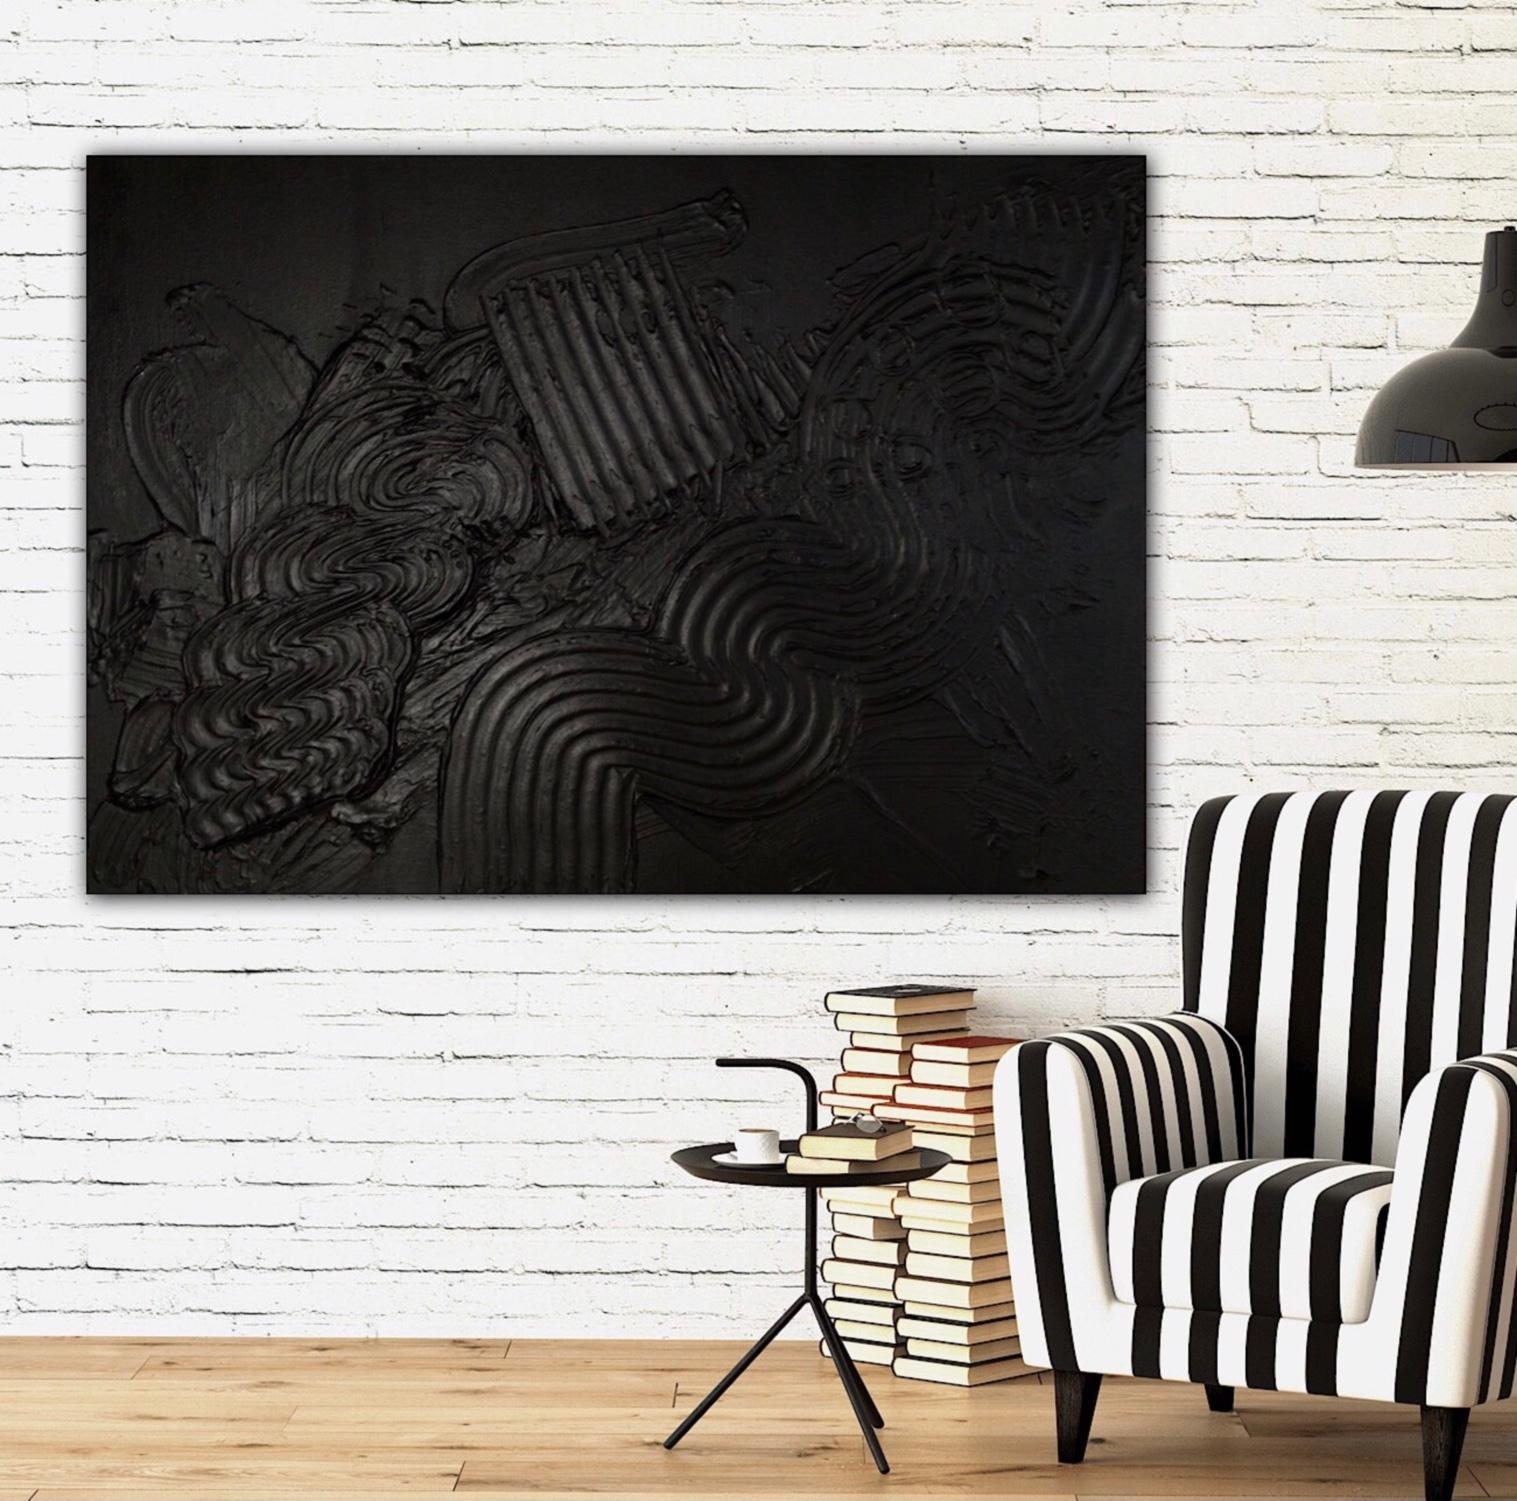 #Black is beautiful 🖤 

#Deko #couchliebt #Couchstyle #Dekoideen #einrichtung #wallart #abstractart #interior #art 